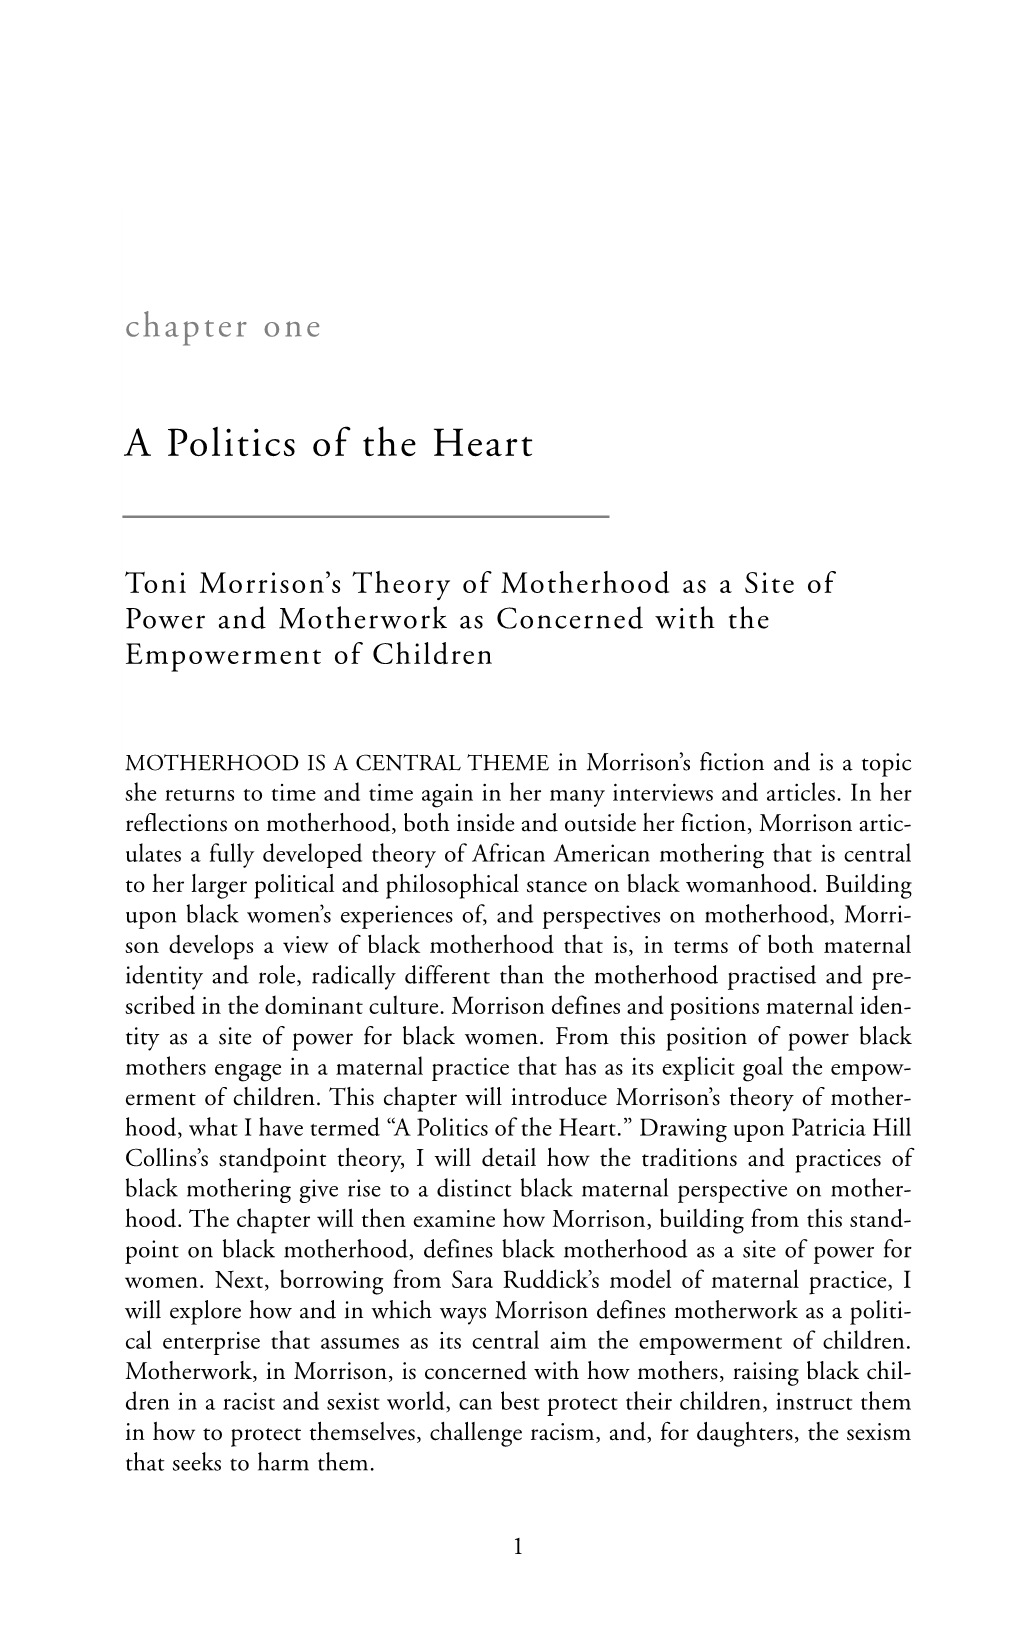 Toni Morrison's Theory of Motherhood